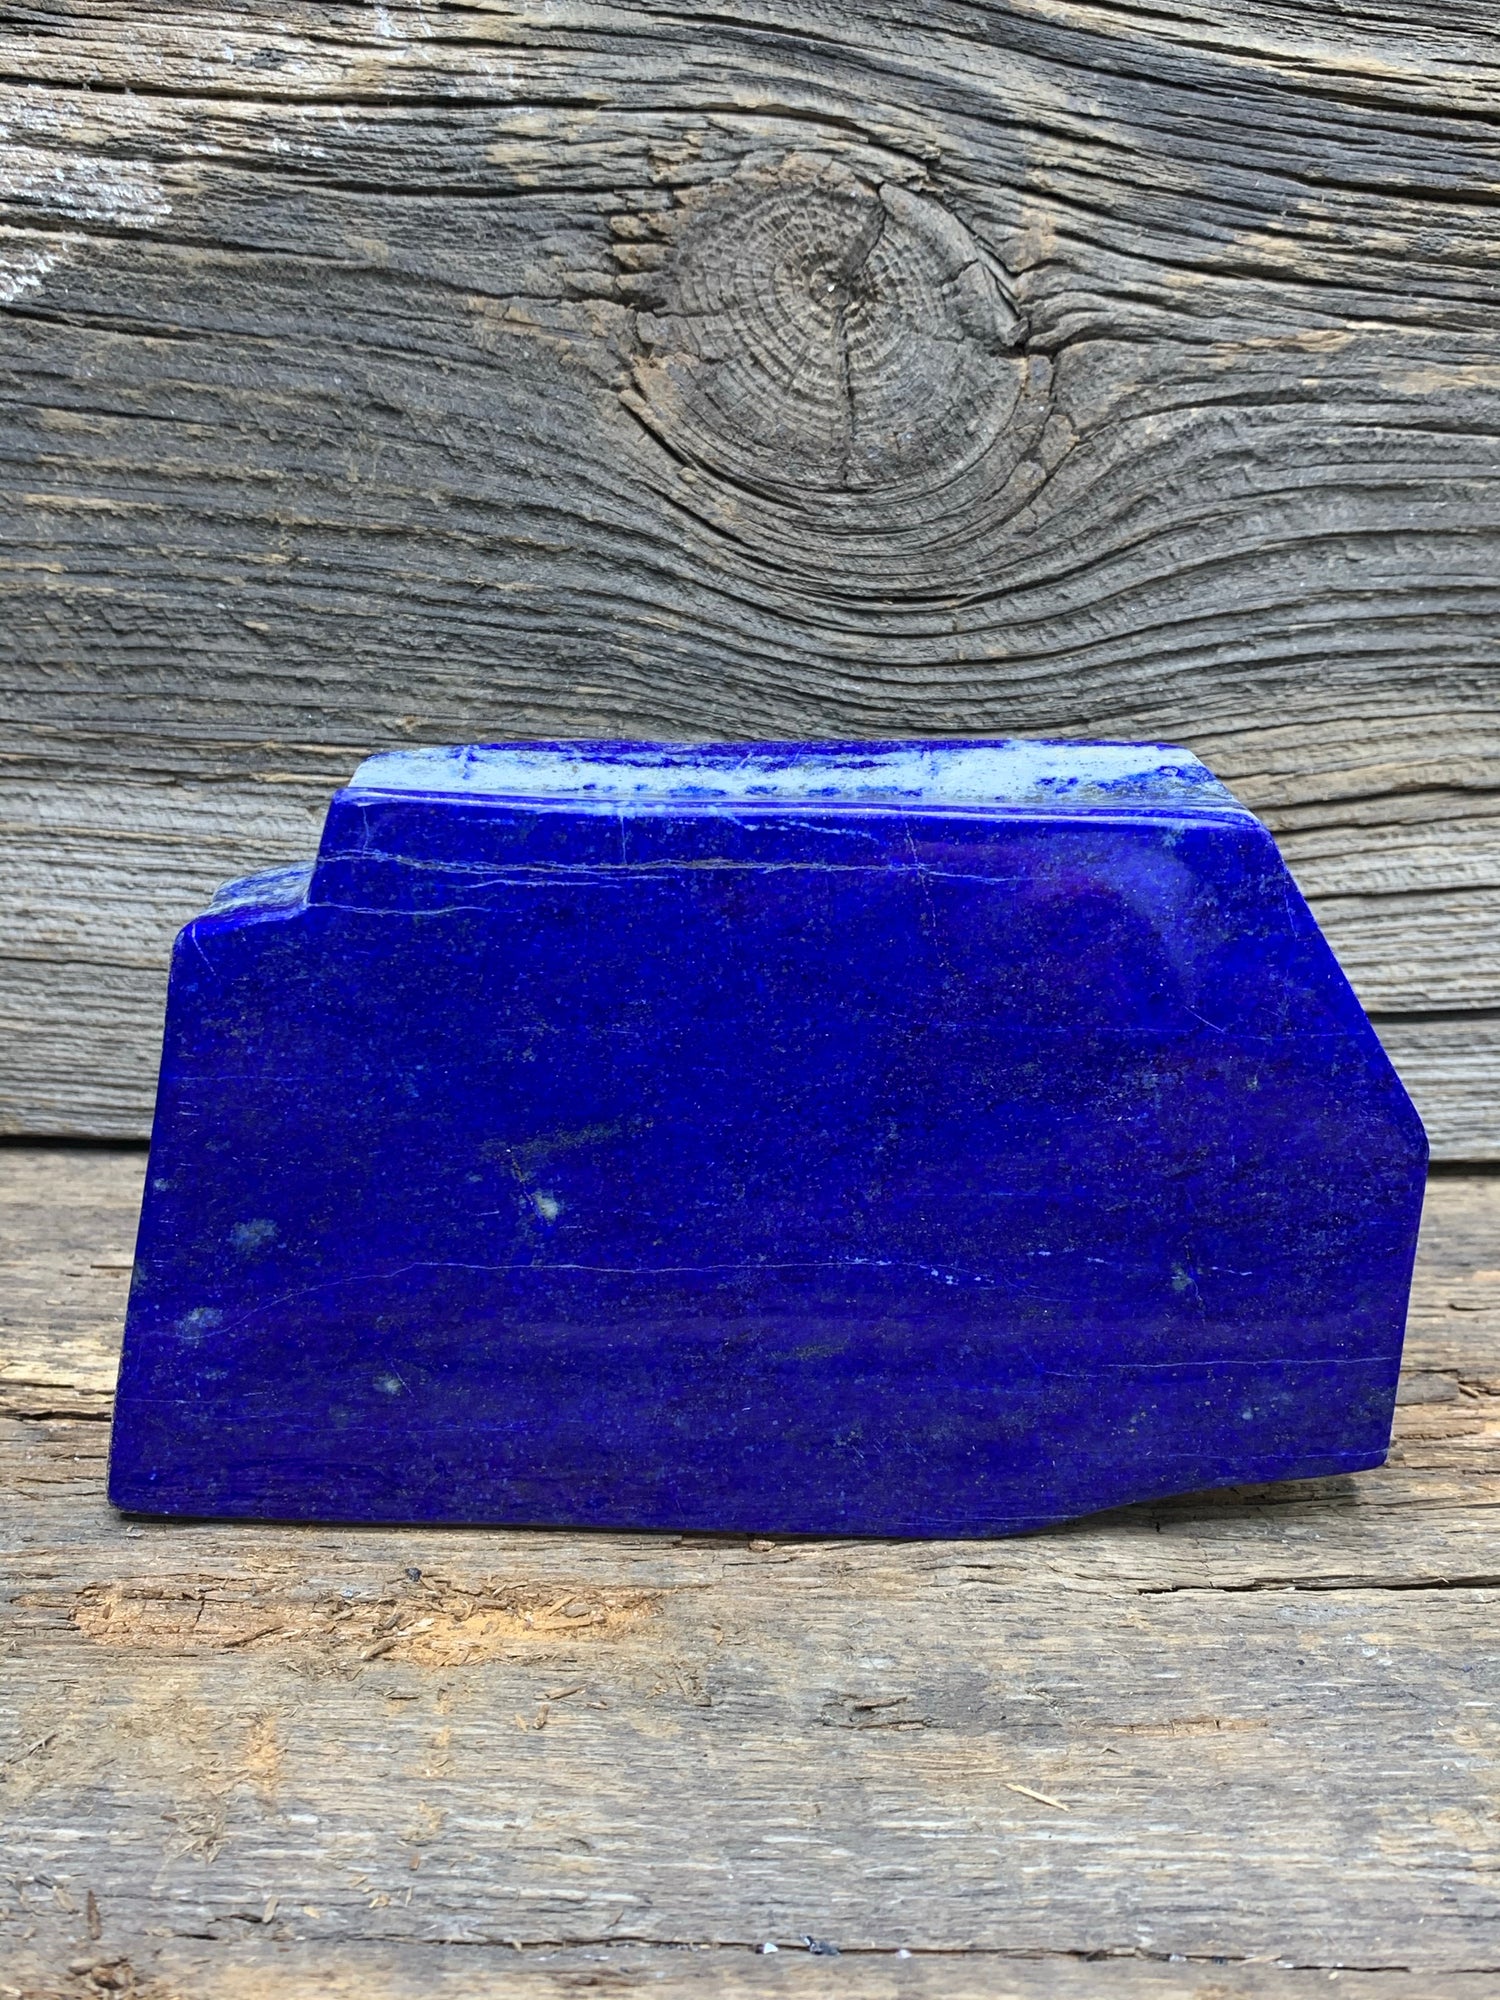 Lapis Lazuli FF - Zero Point Crystals